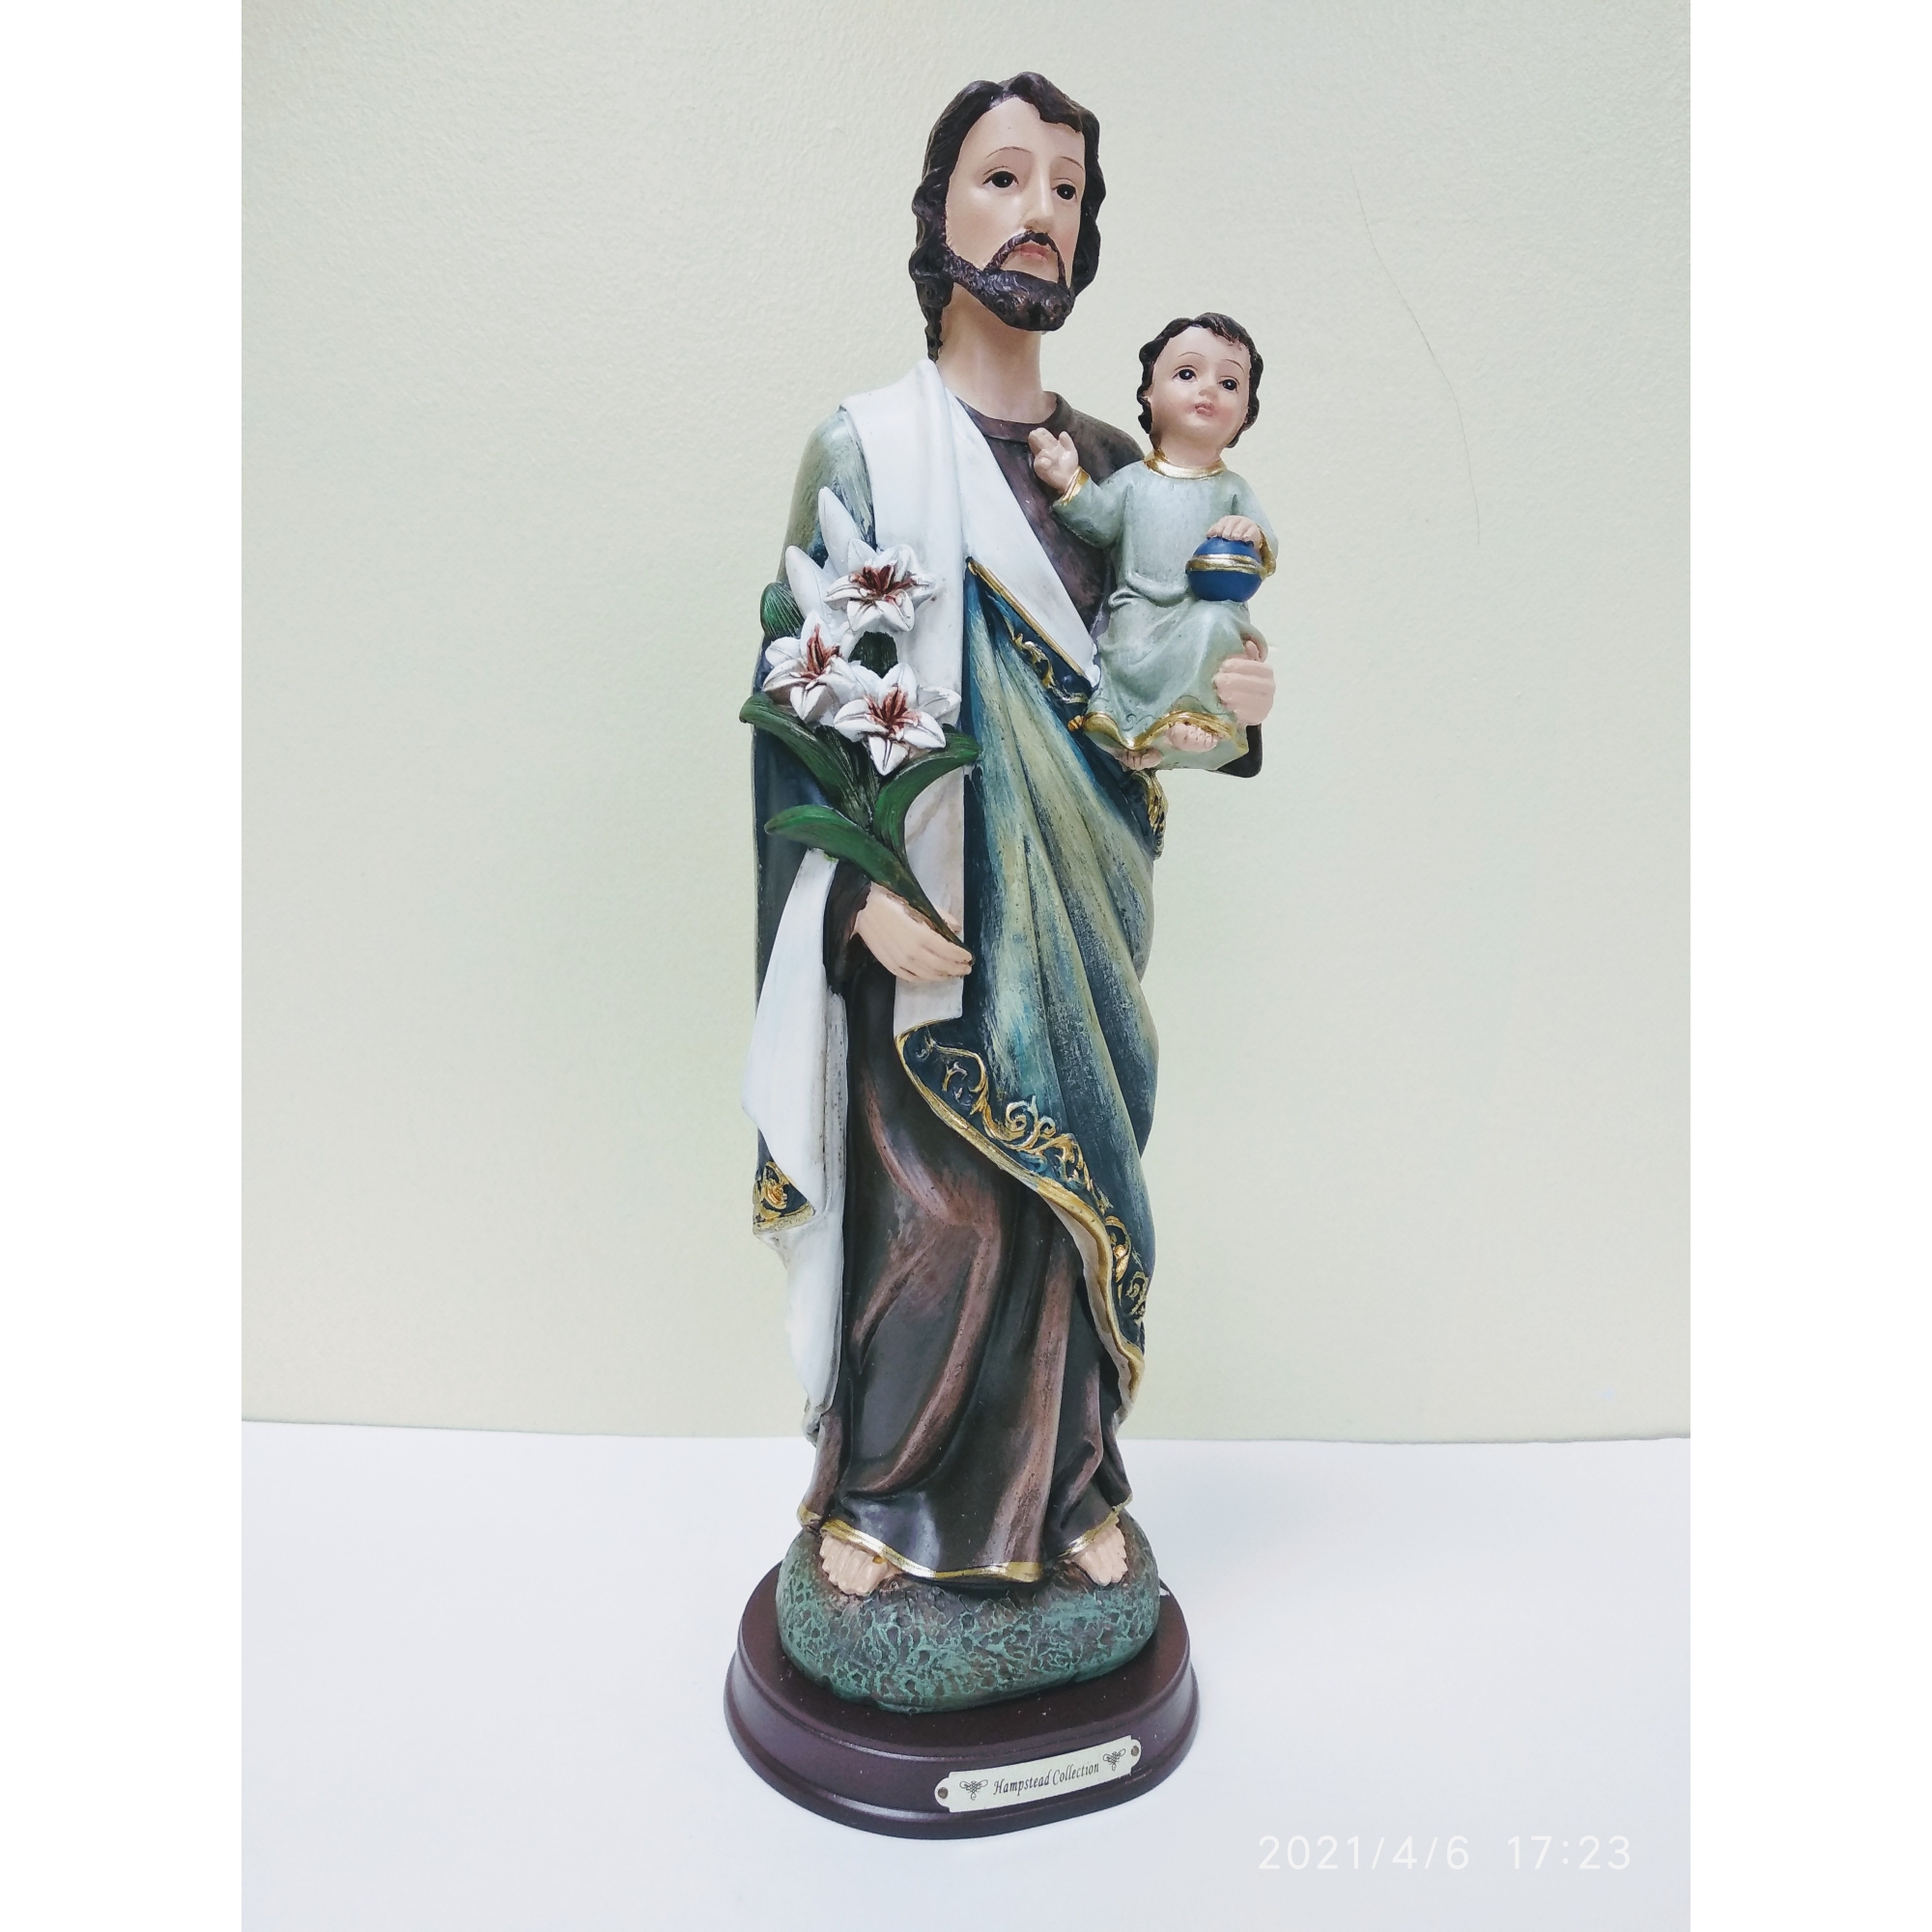 St Joseph with Child Jesus, 12"